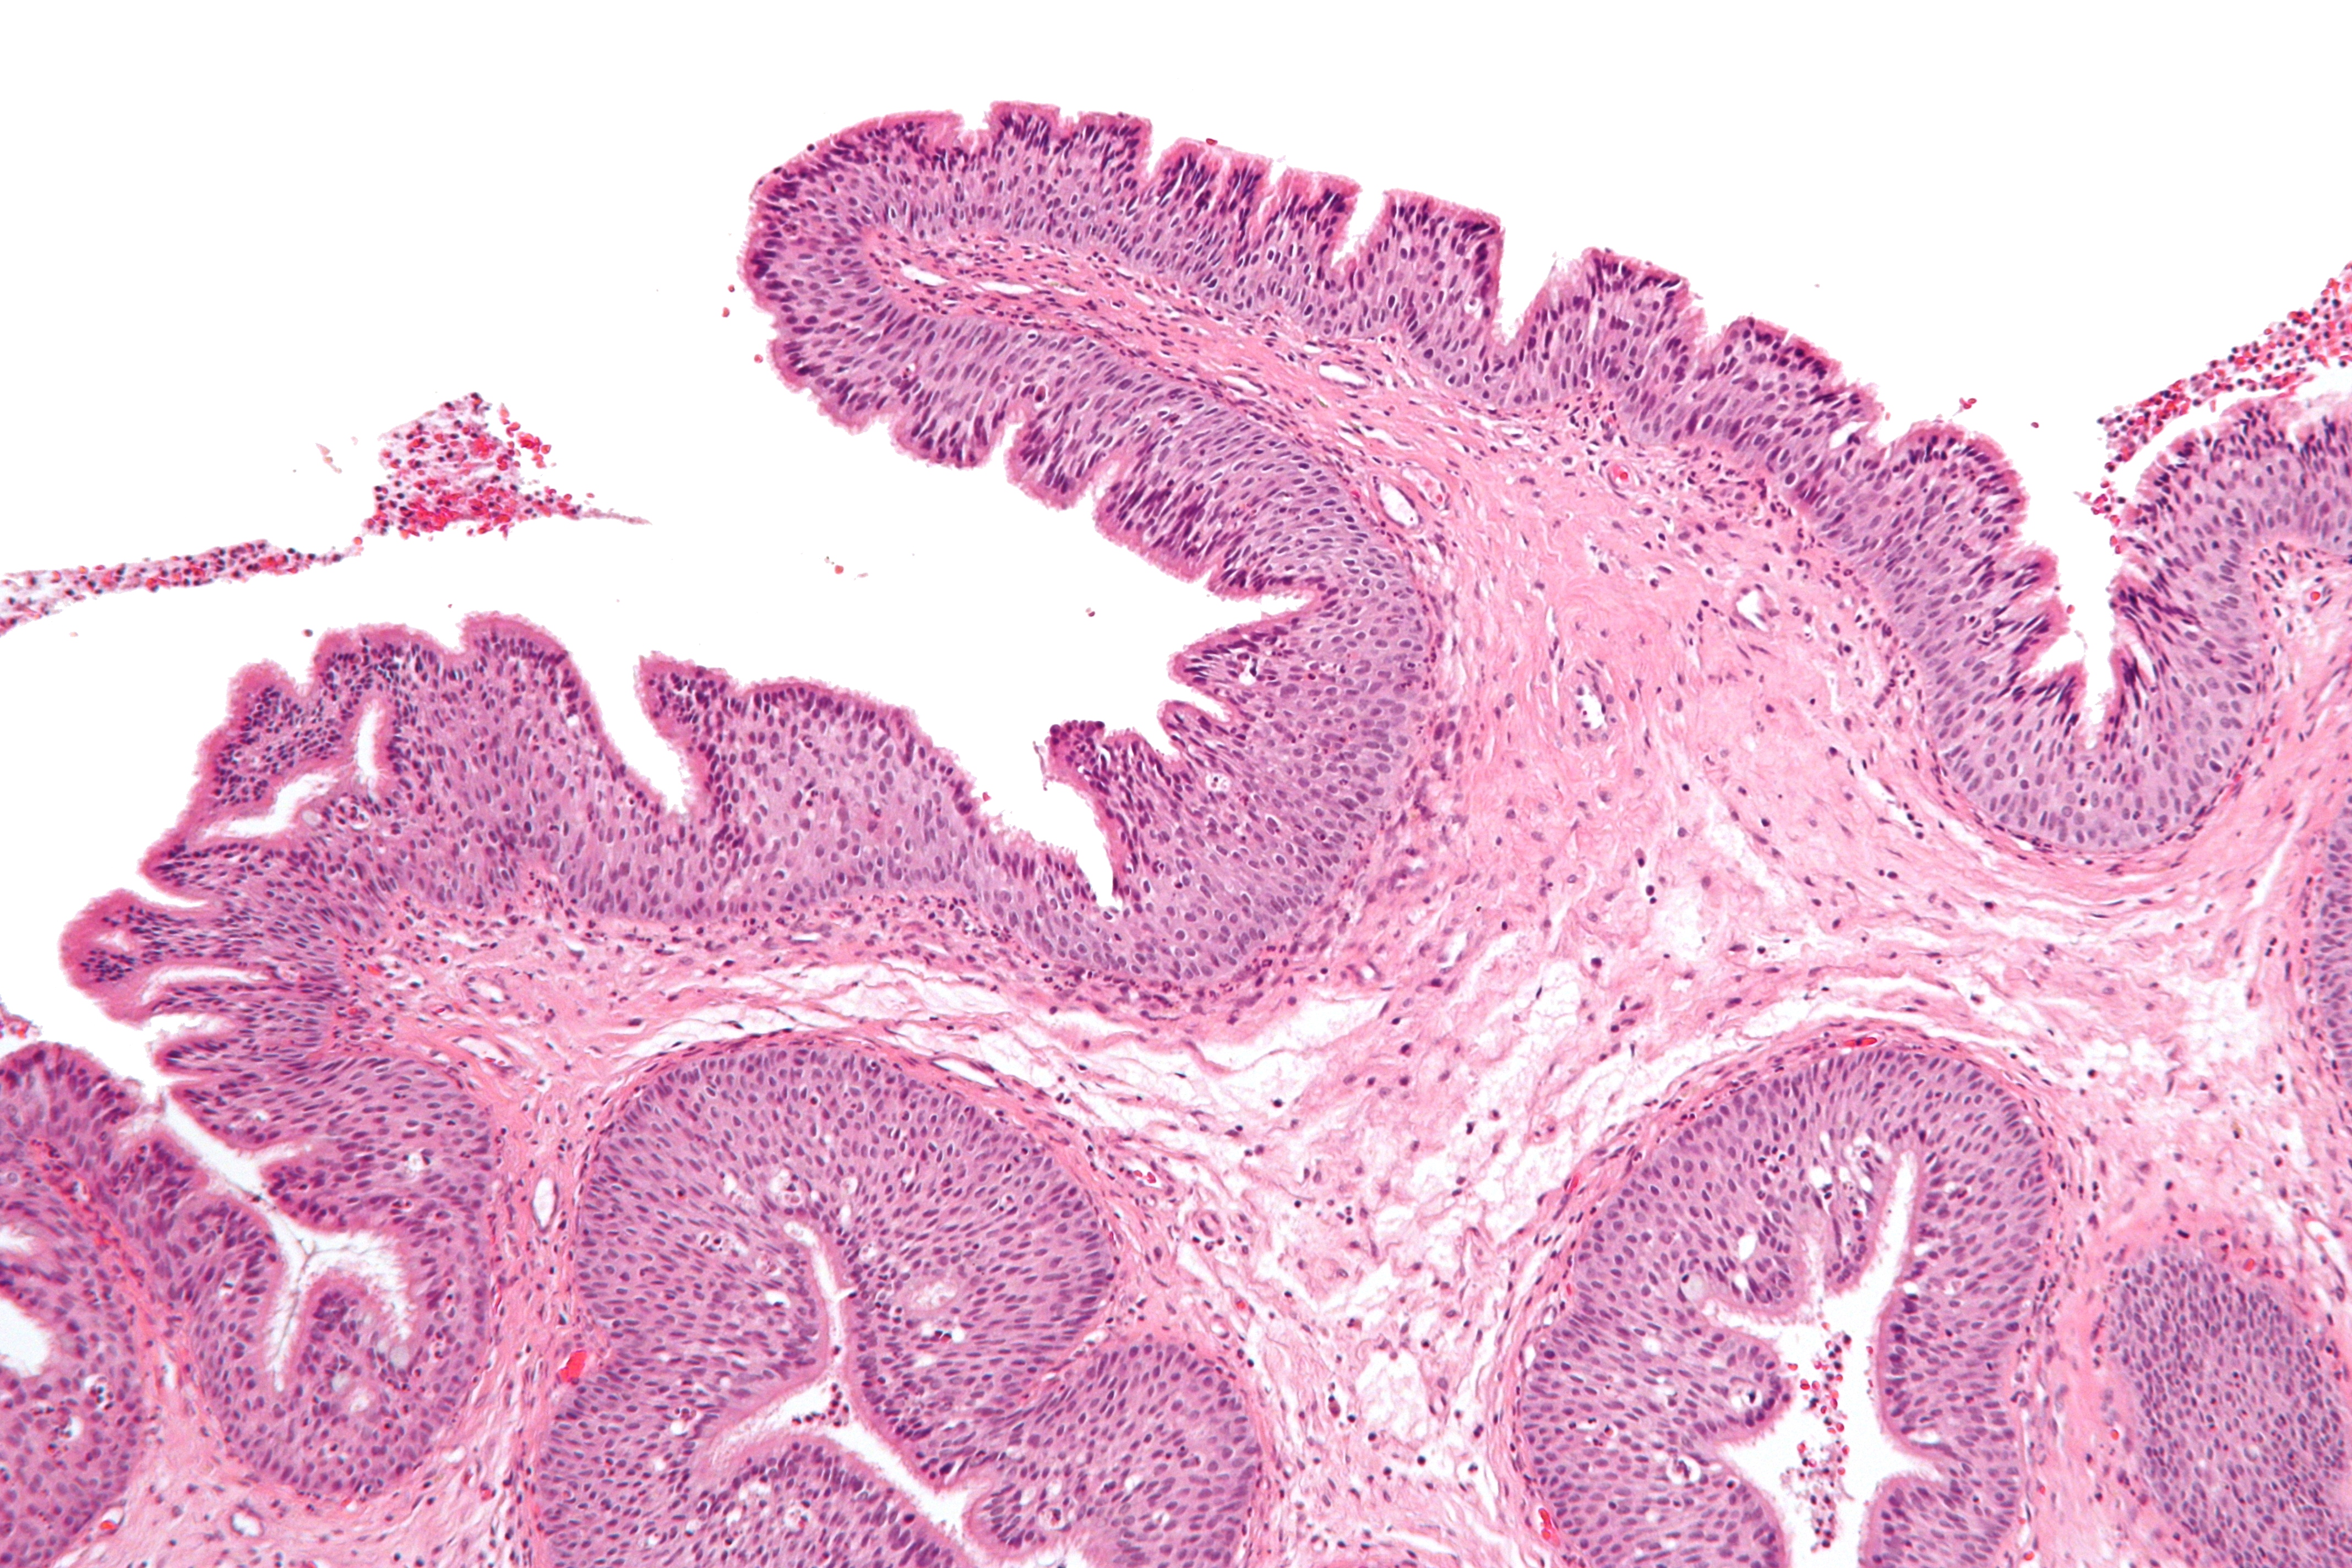 sinonasal papilloma pathology outlines